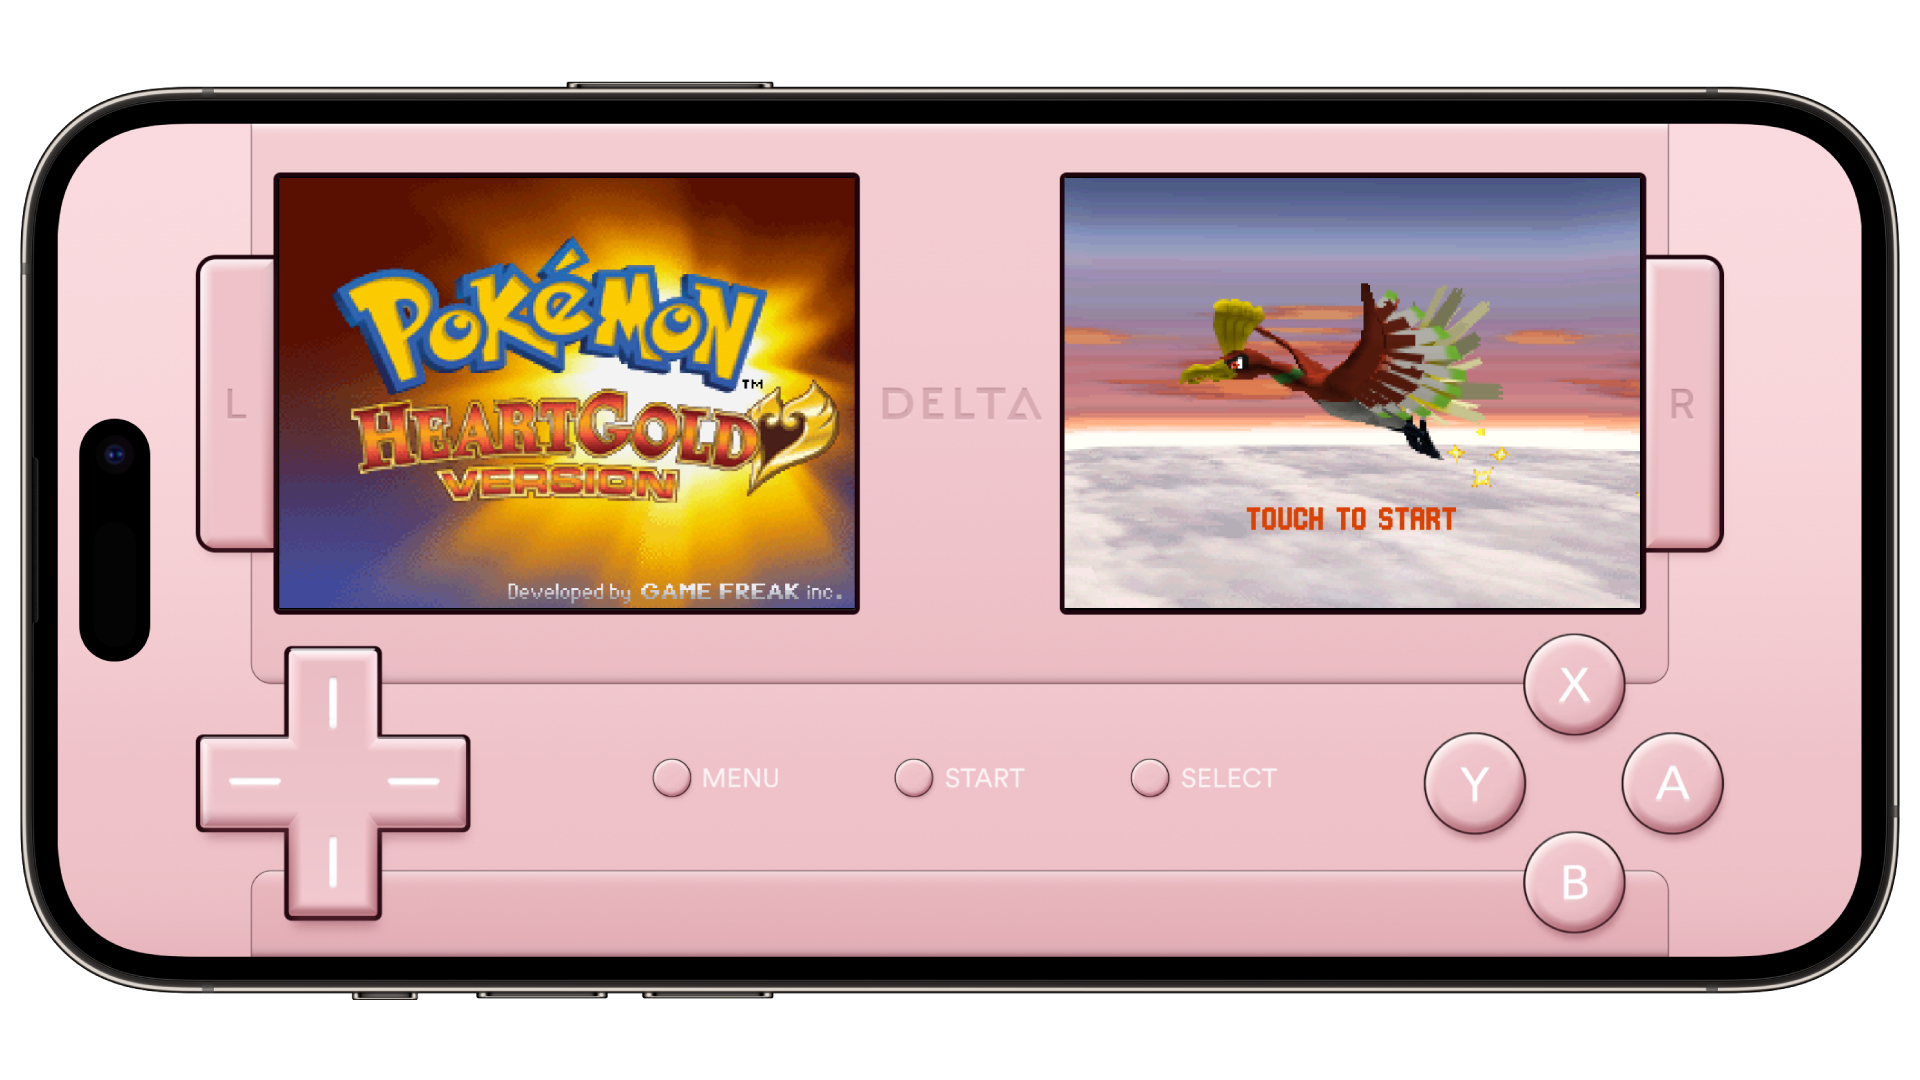 Pokemon Heart Gold running on Delta for iPhone